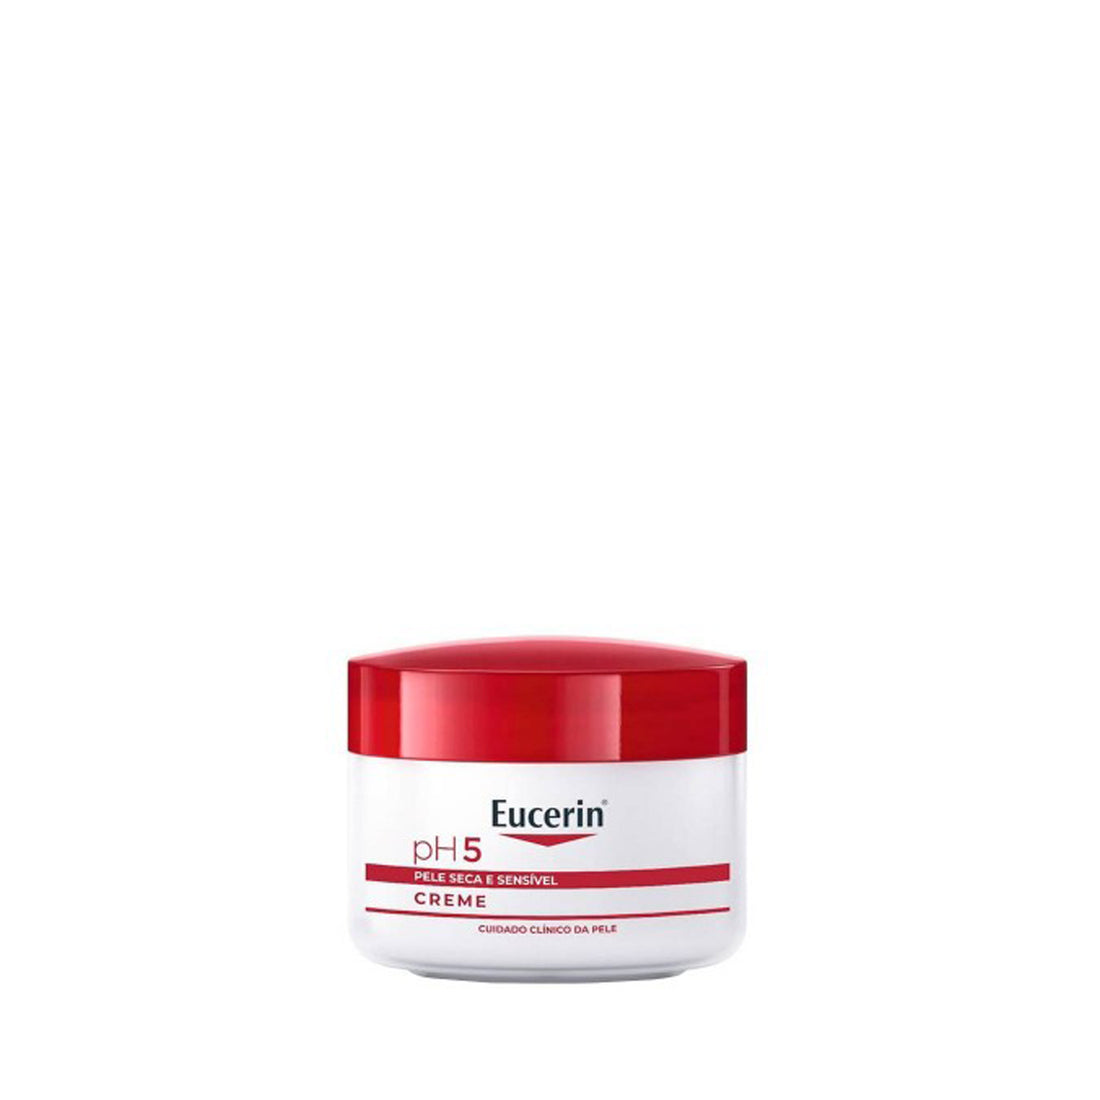 Eucerin pH5 Cream 75ml (2.54fl oz)